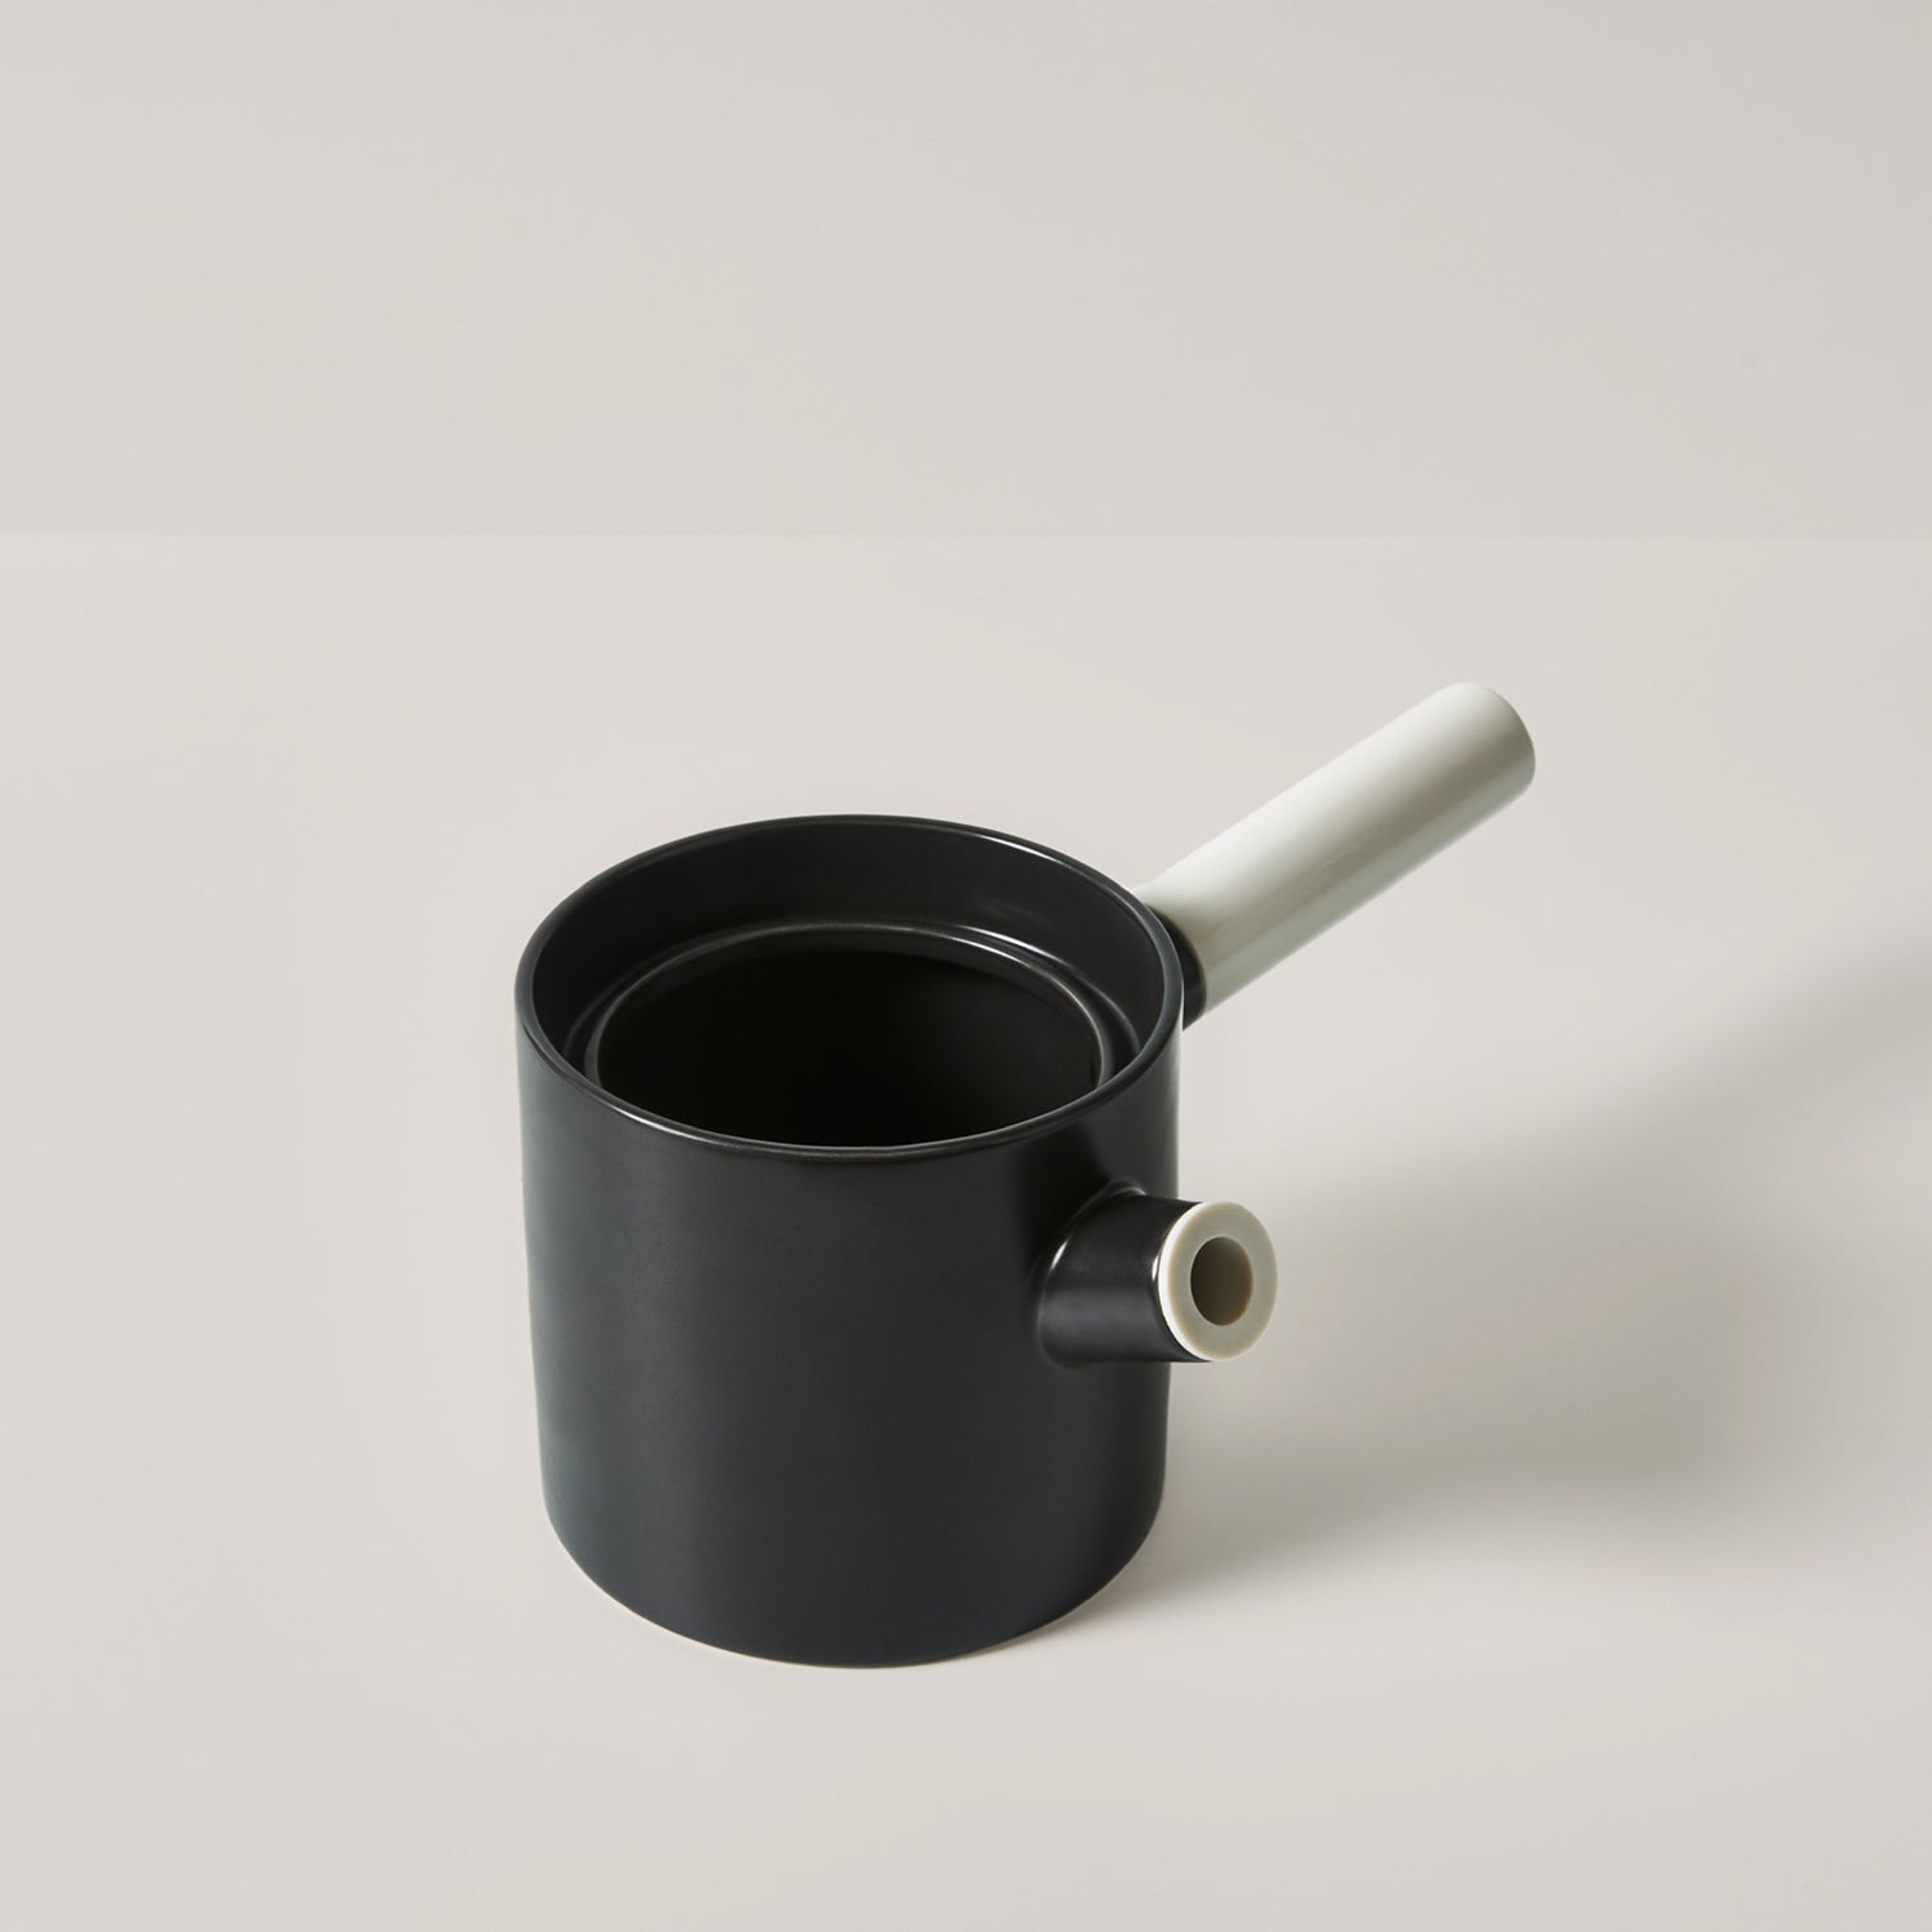 Small Teapot